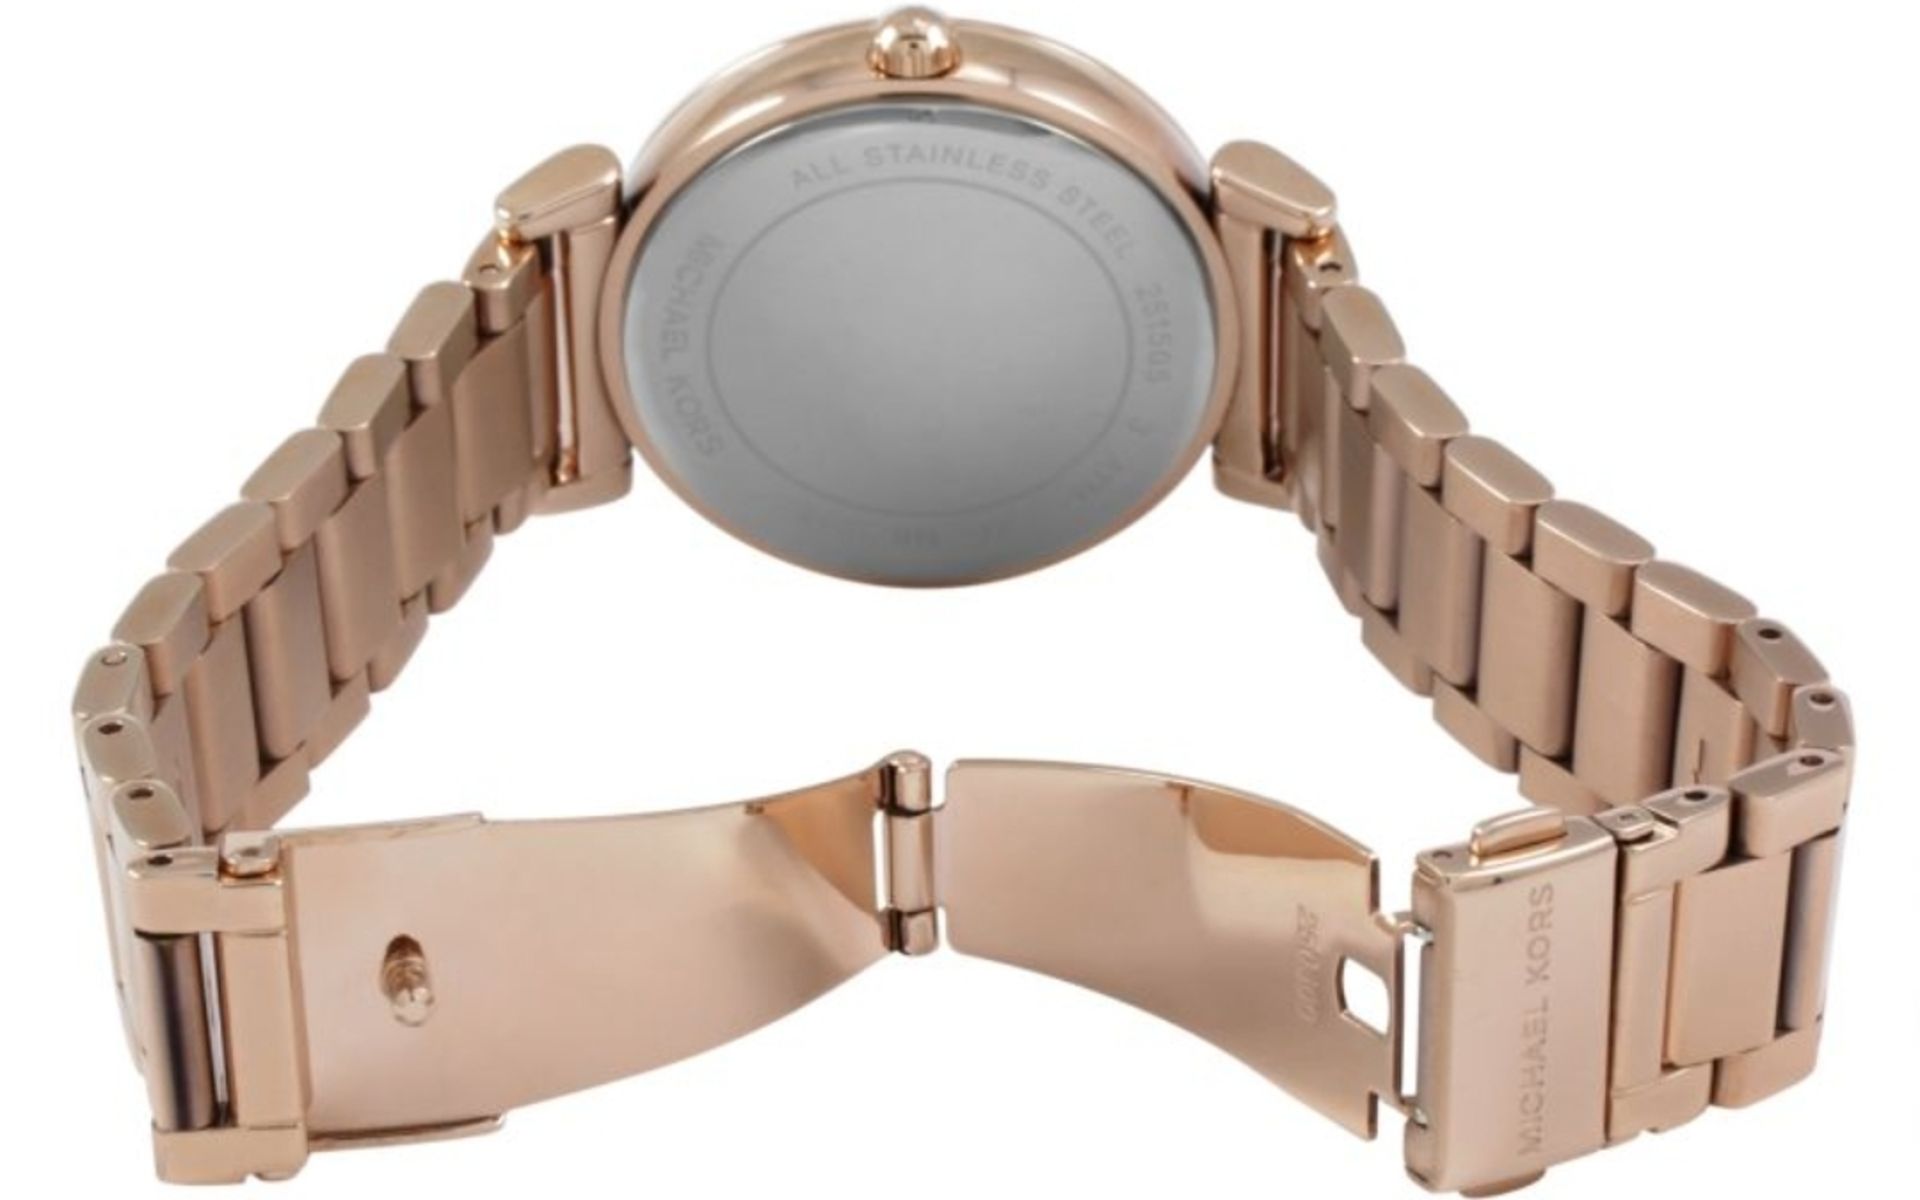 Michael Kors MK3356 Ladies Catlin Rose Gold Quartz Watch - Image 4 of 6